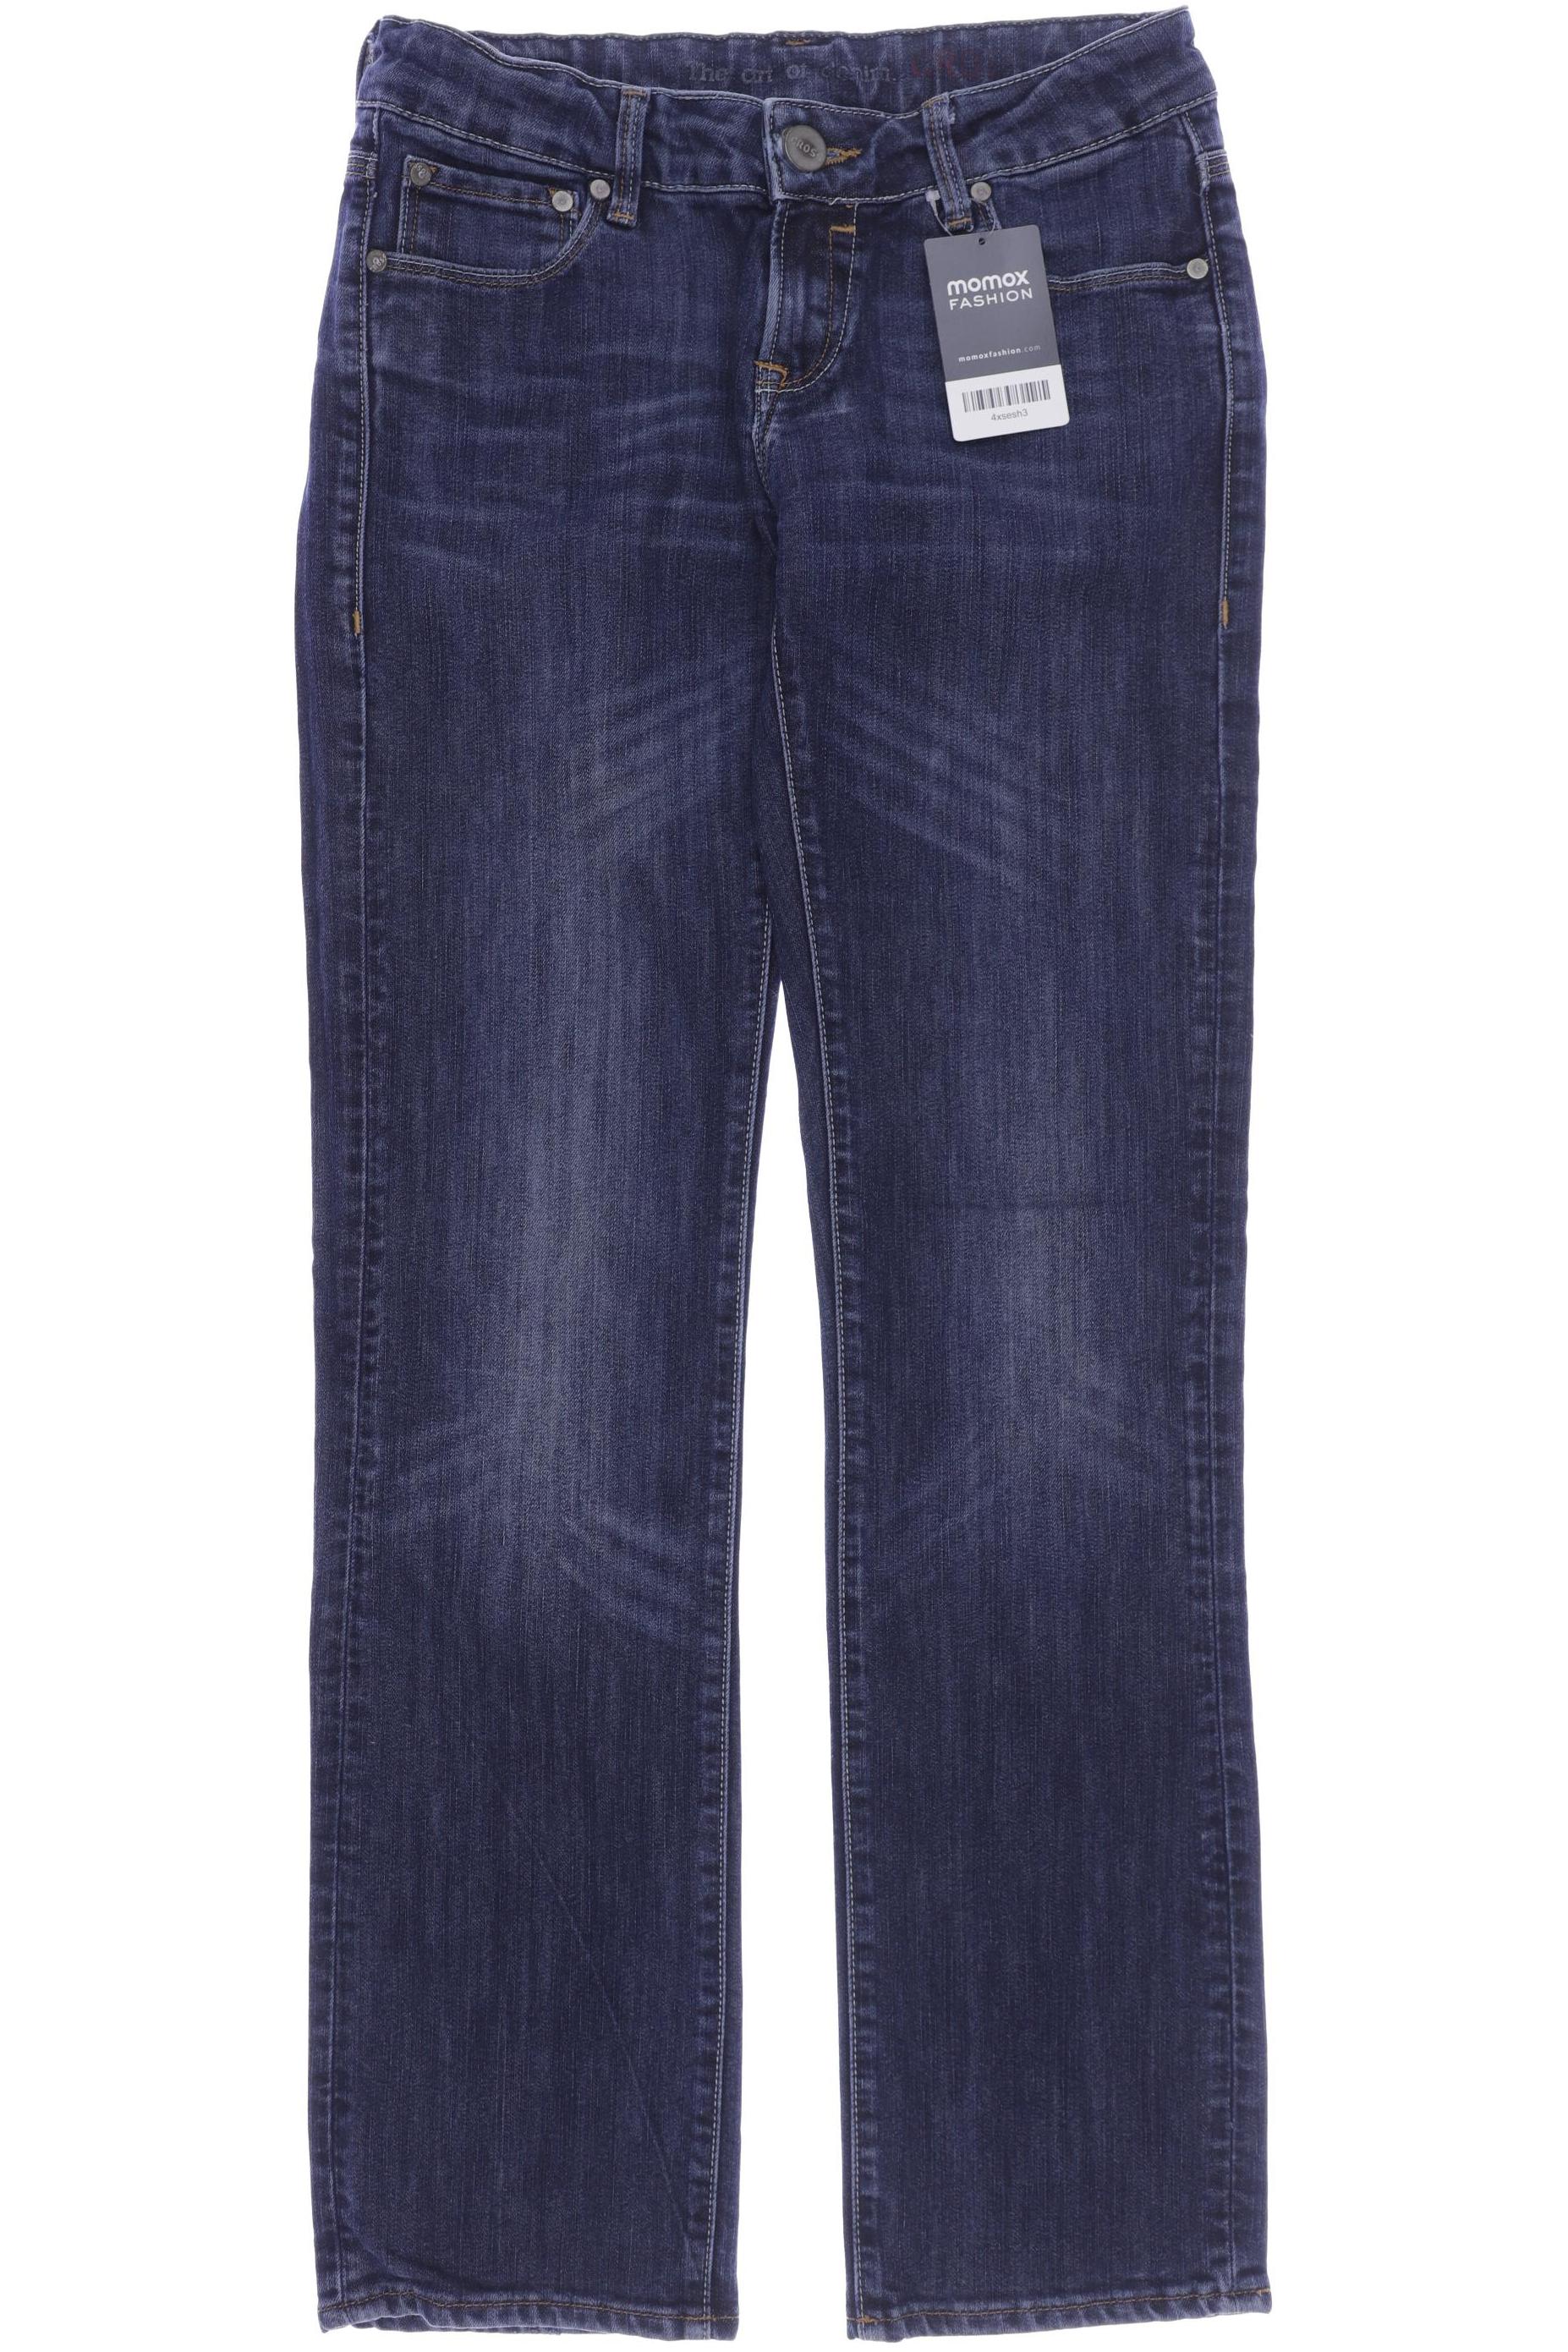 Cross Jeans Damen Jeans, marineblau von cross jeans